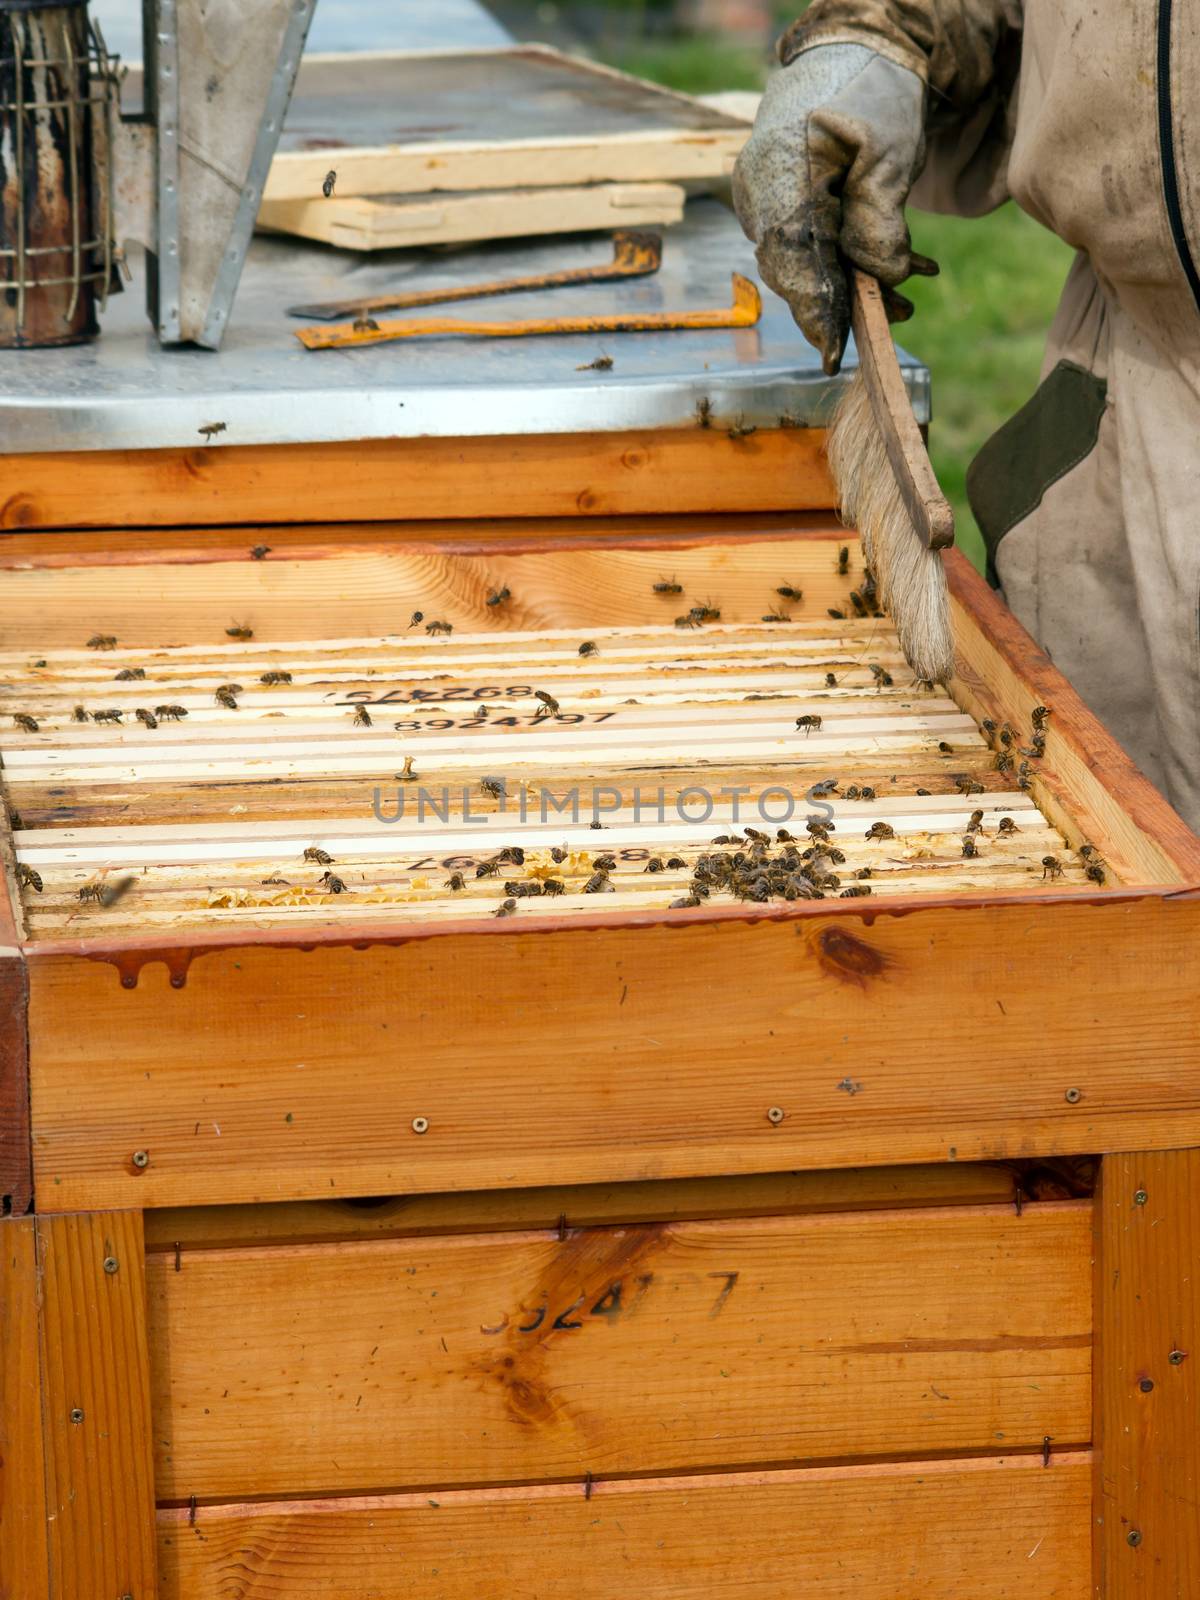 bees, honey, hive by dadalia